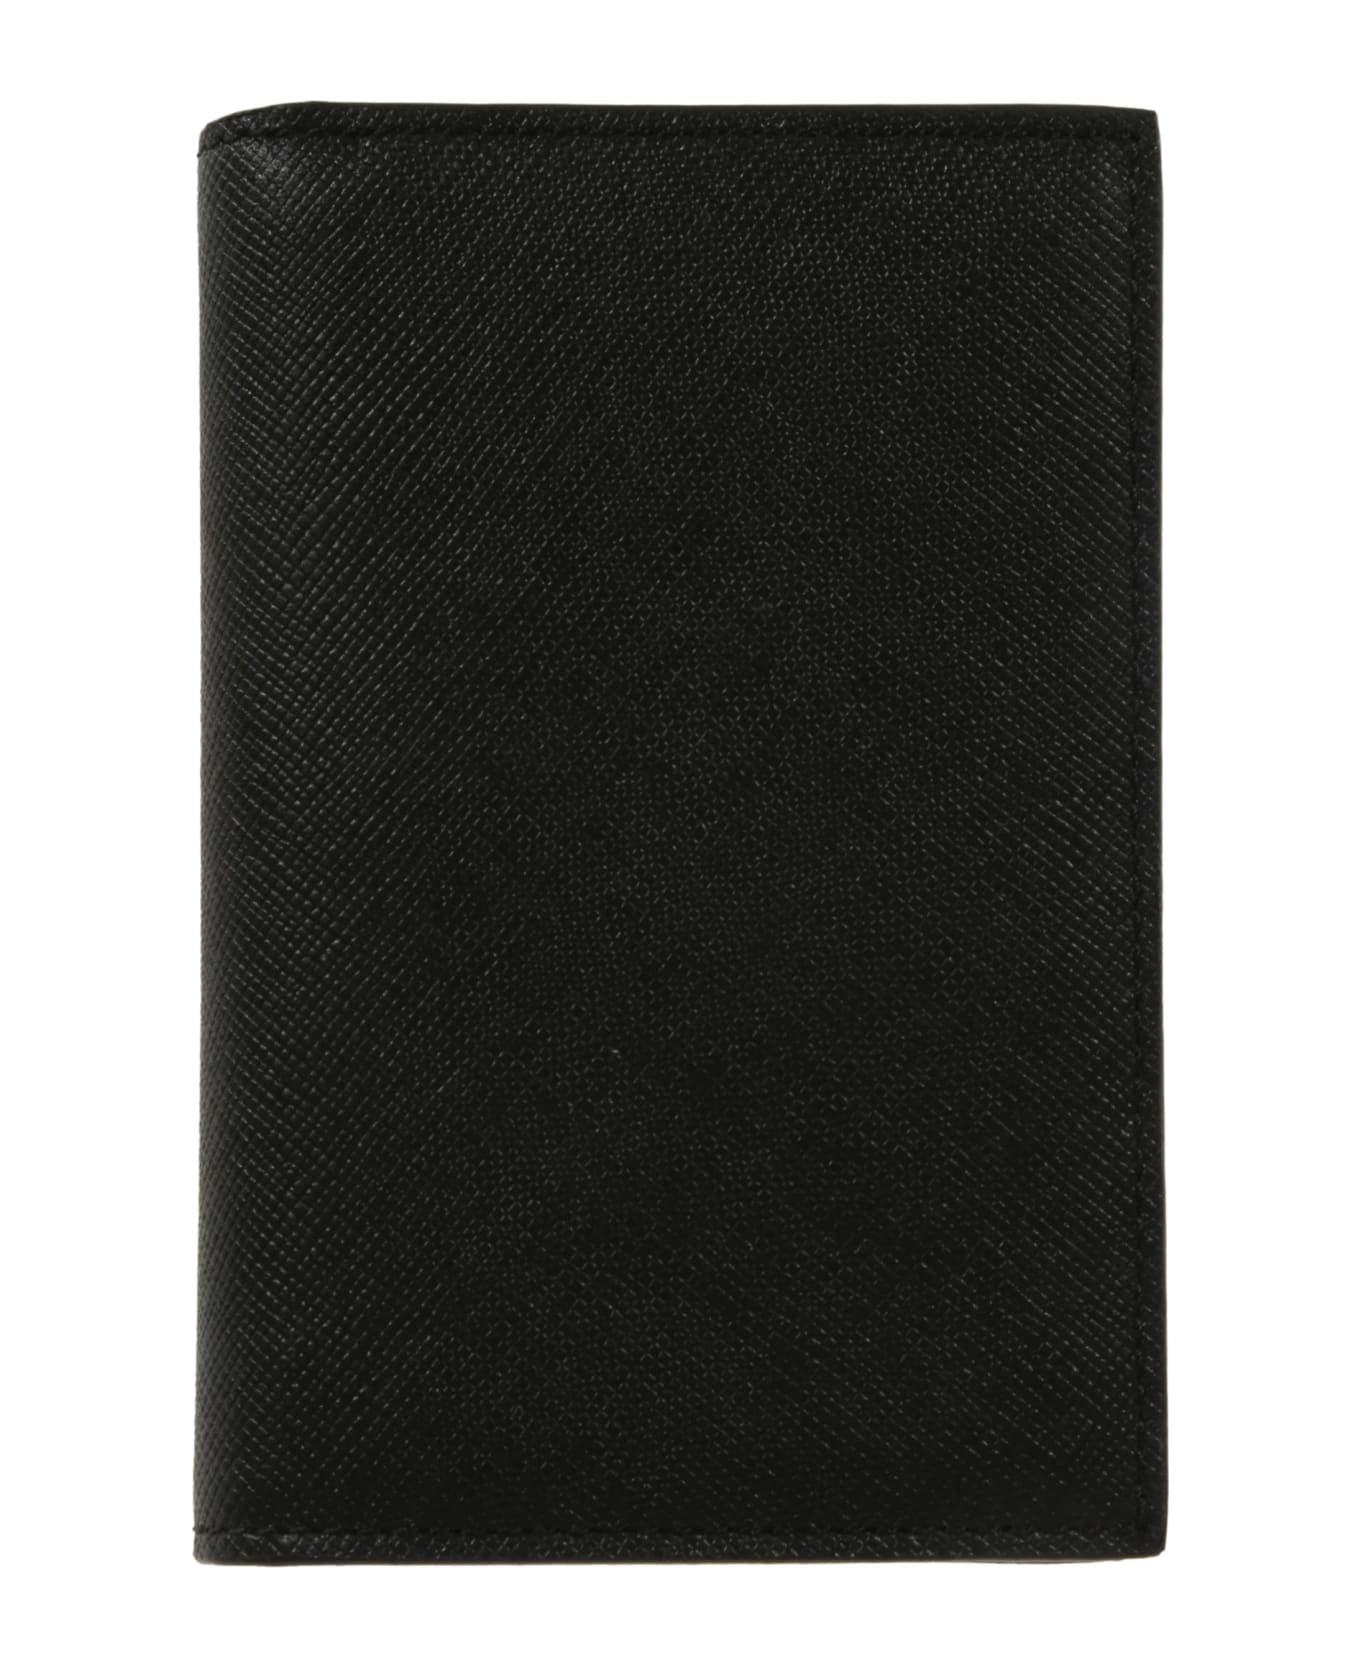 Paul Smith Wallet Cc Case Mini - Black